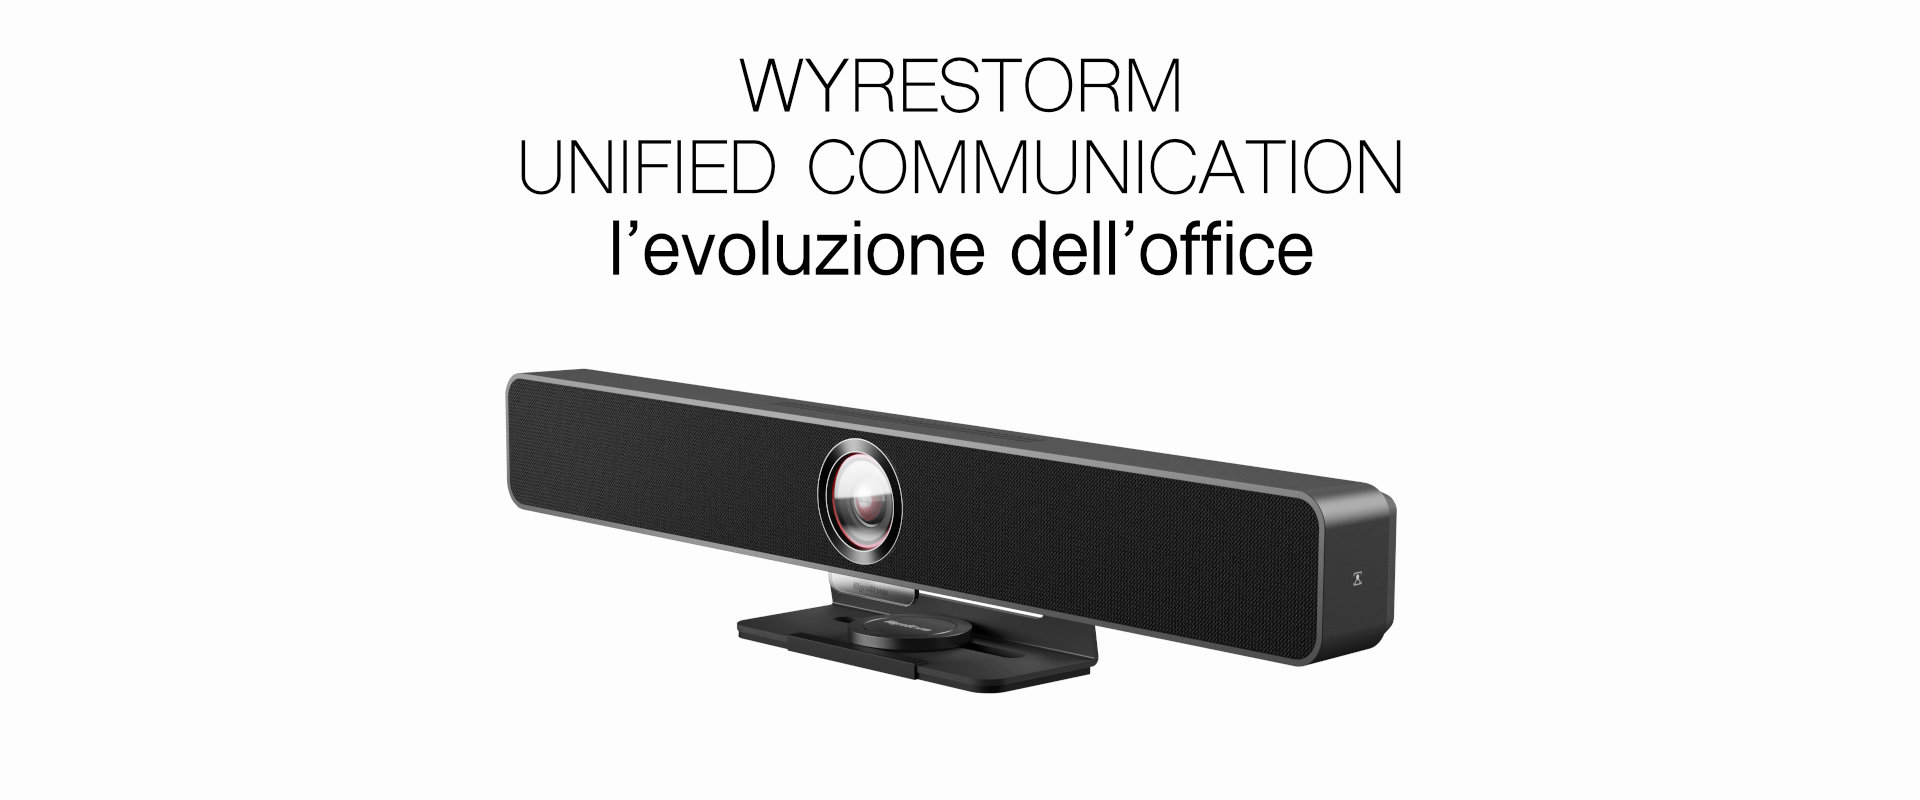 wyrestorm unified communication